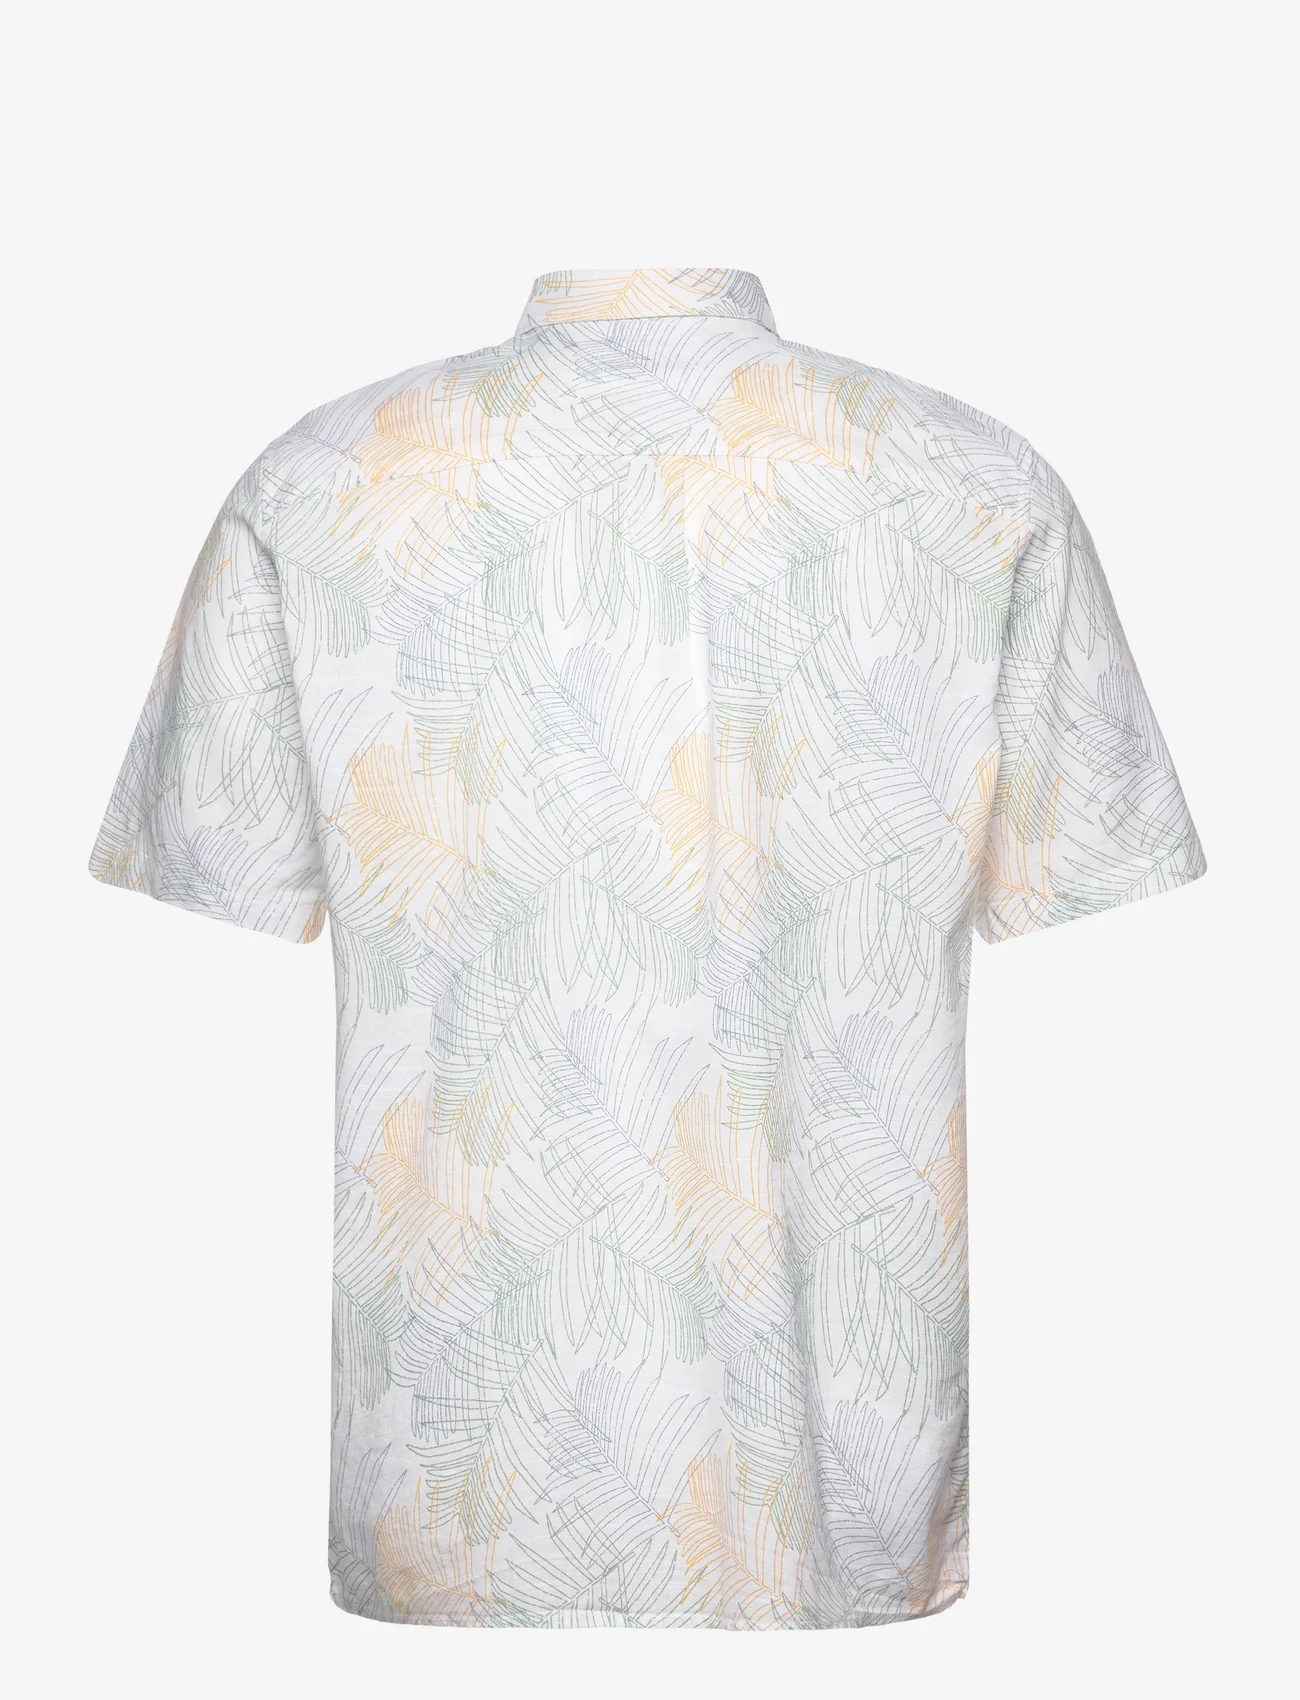 Tom Tailor - comfort printed shirt - kortärmade skjortor - white multicolor leaf design - 1